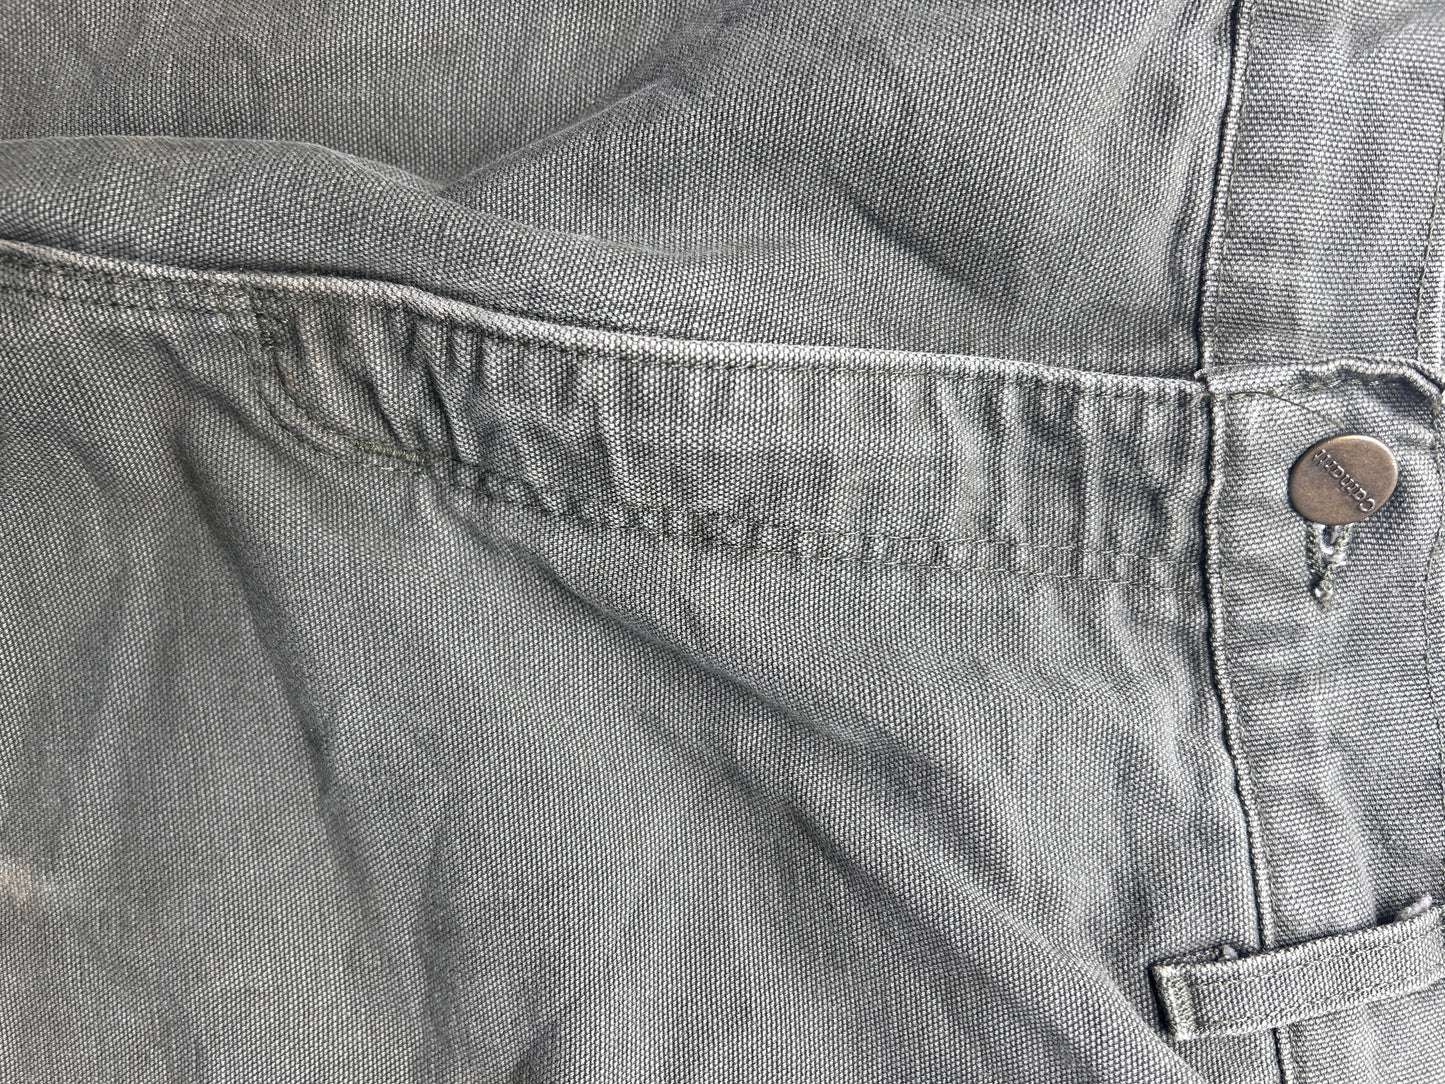 Vintage Carhartt Lined Pants - W32 x L32